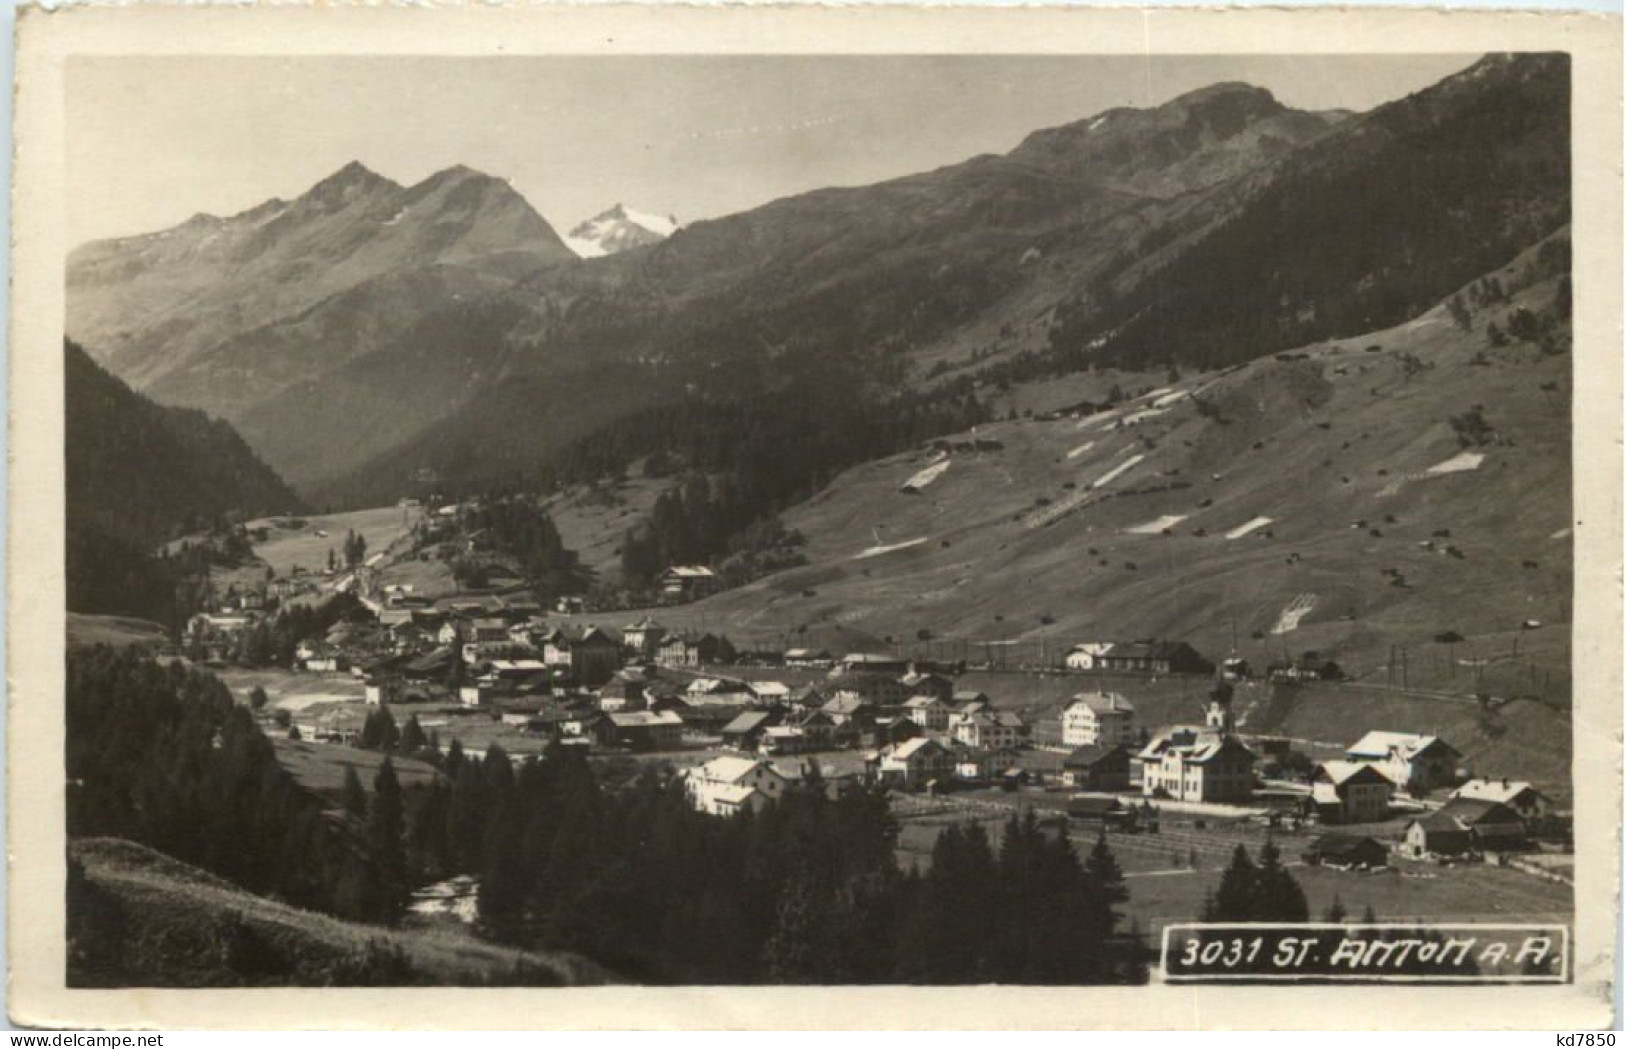 St. Anton Am Arlberg - St. Anton Am Arlberg